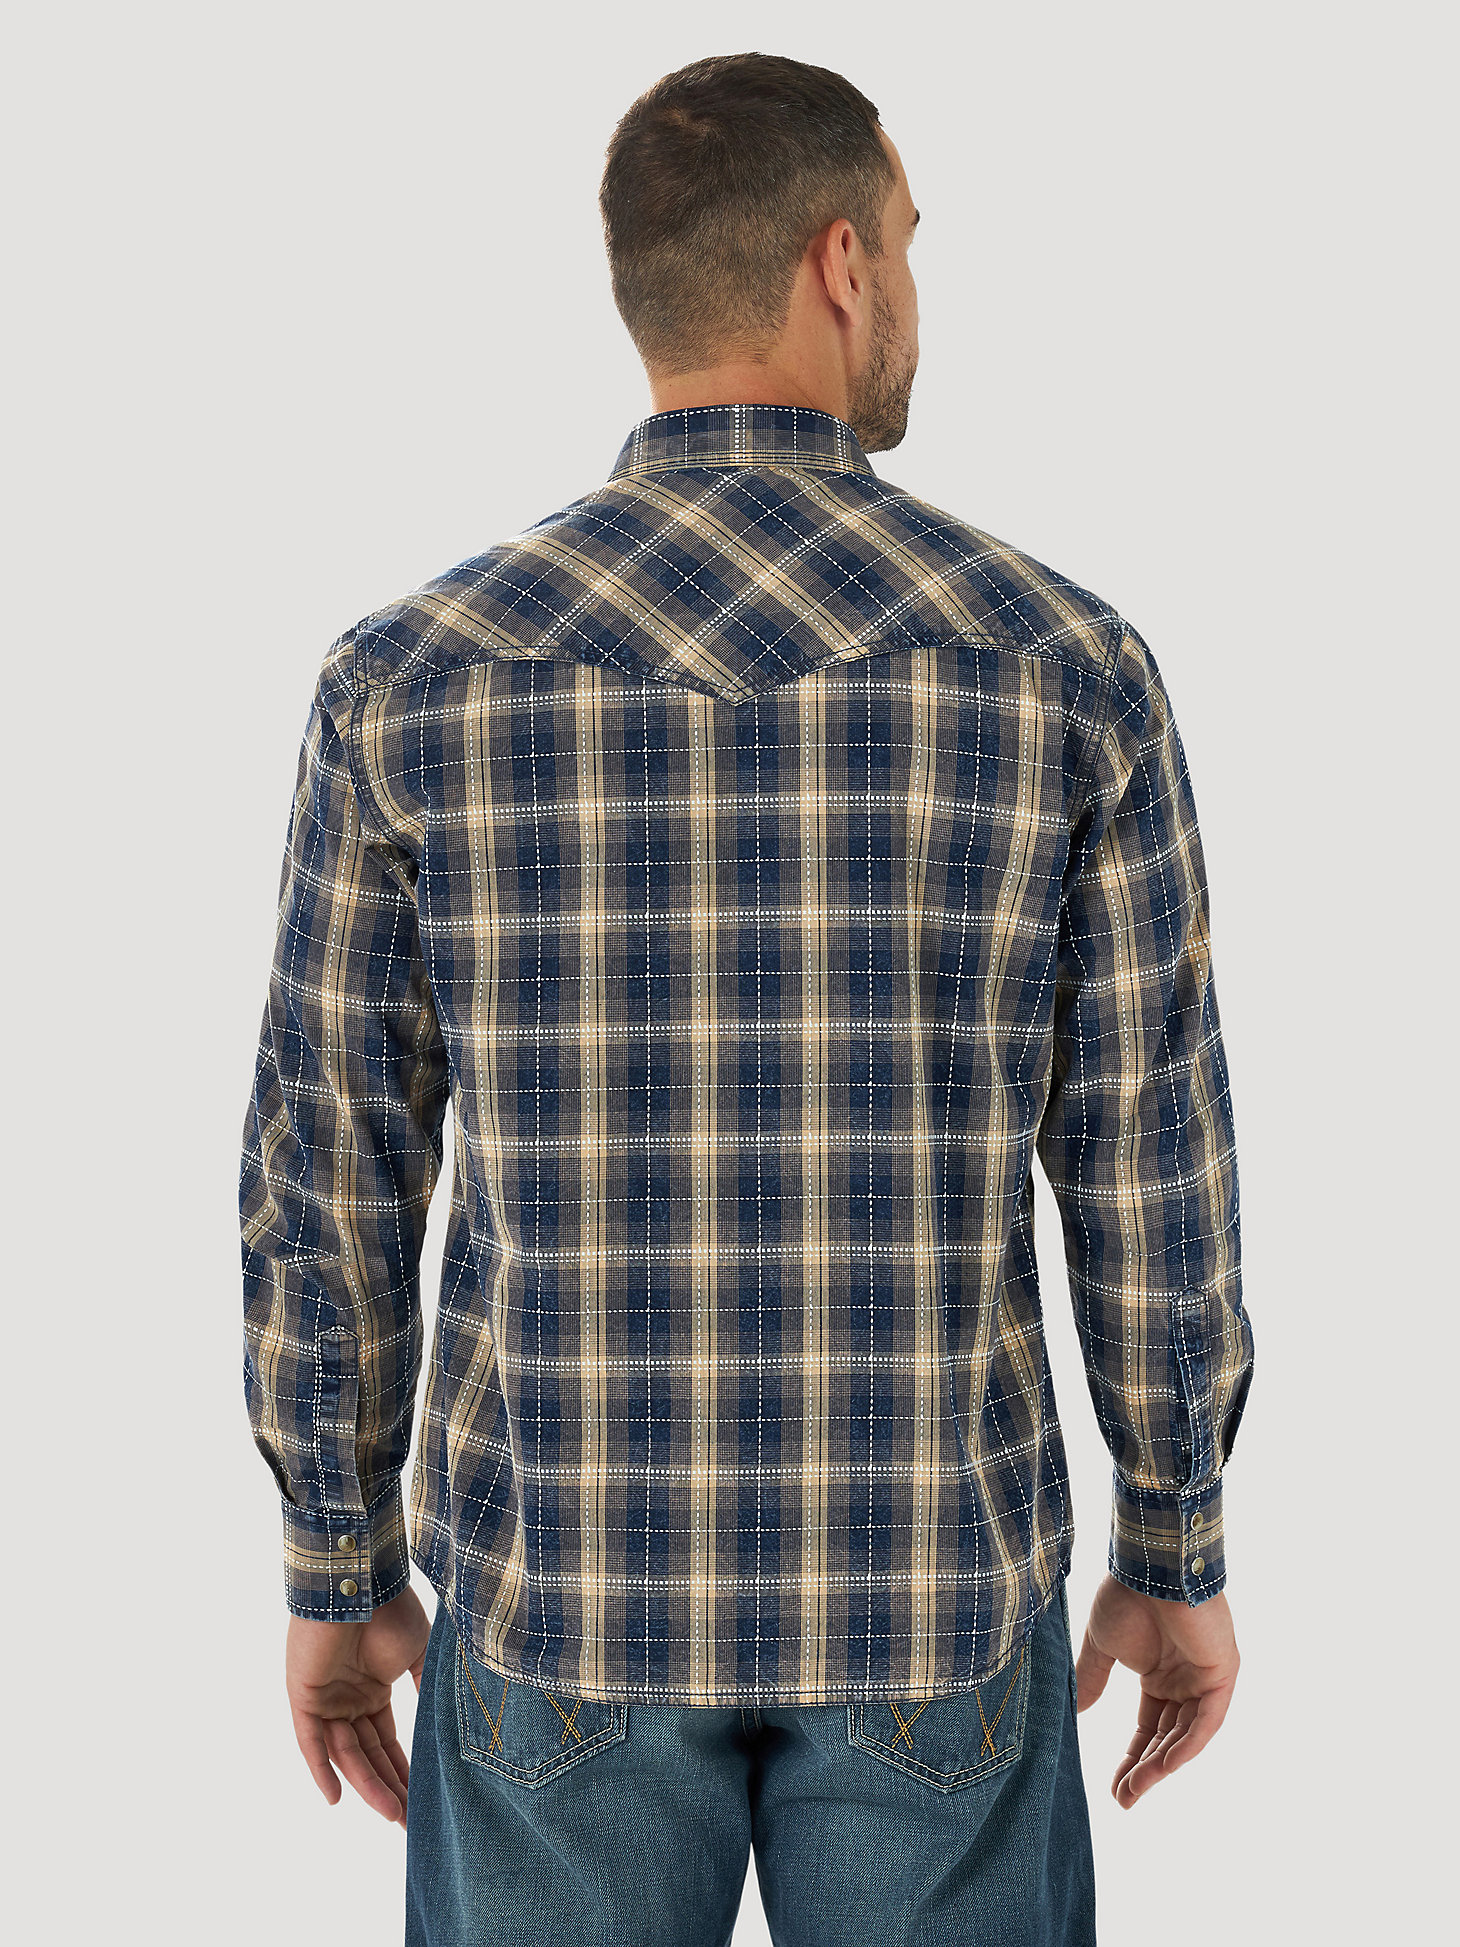 Men's Wrangler Retro Premium Contrast Trim Western Snap Flap Pocket Plaid Shirt in Blue Oats alternative view 4